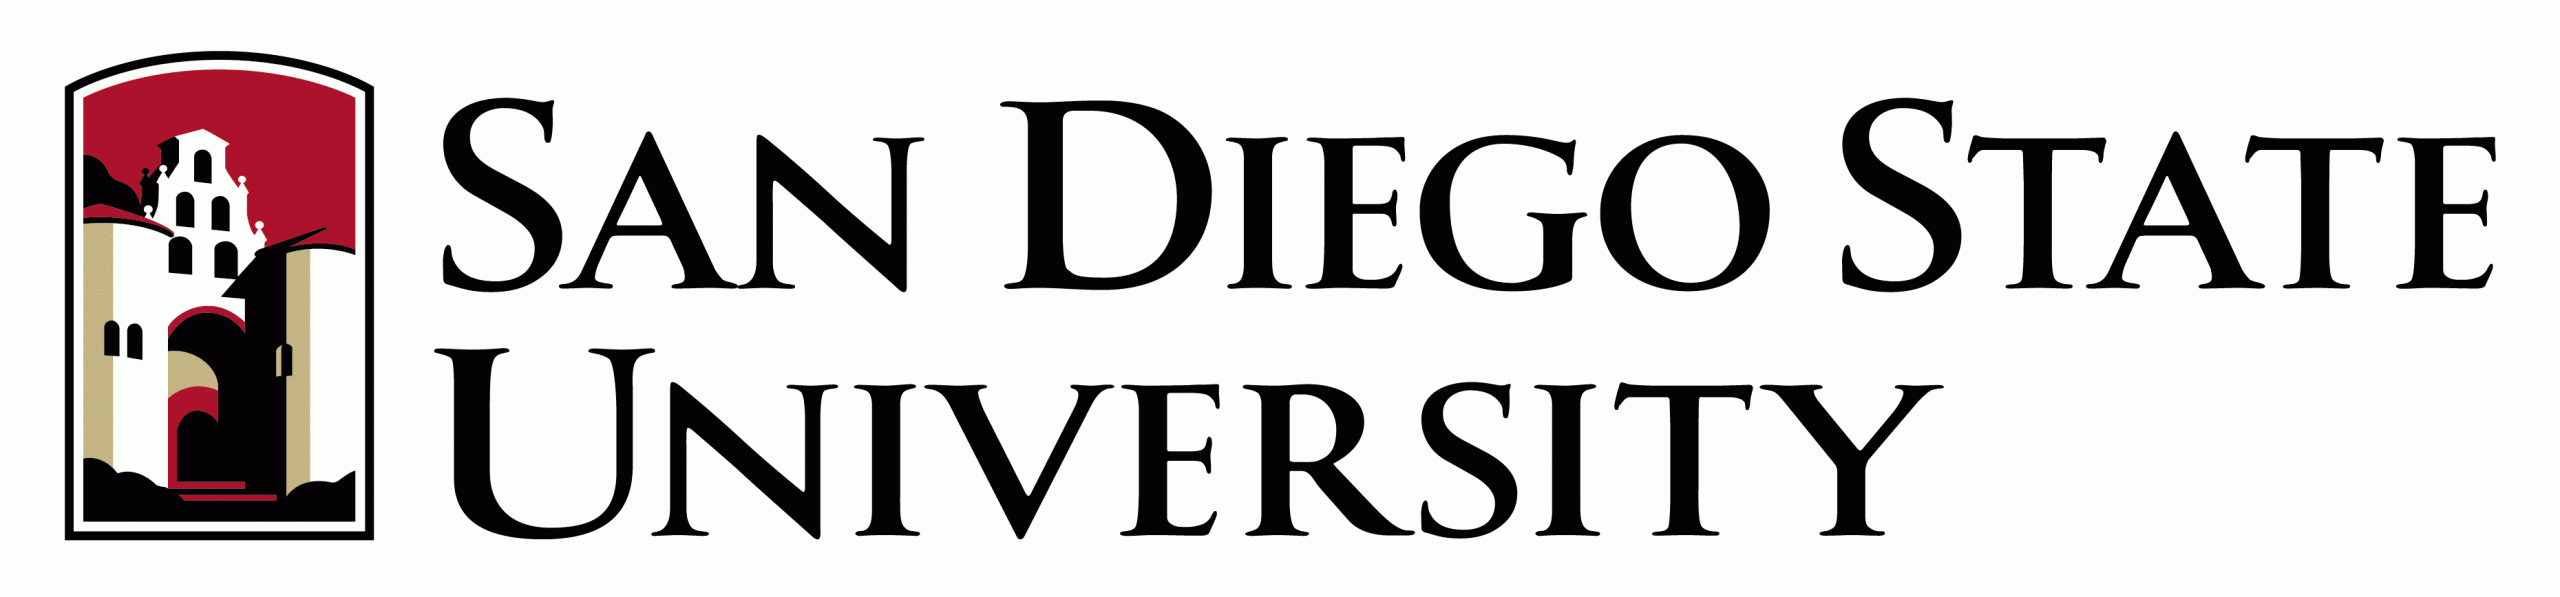 San Diego State University post orders